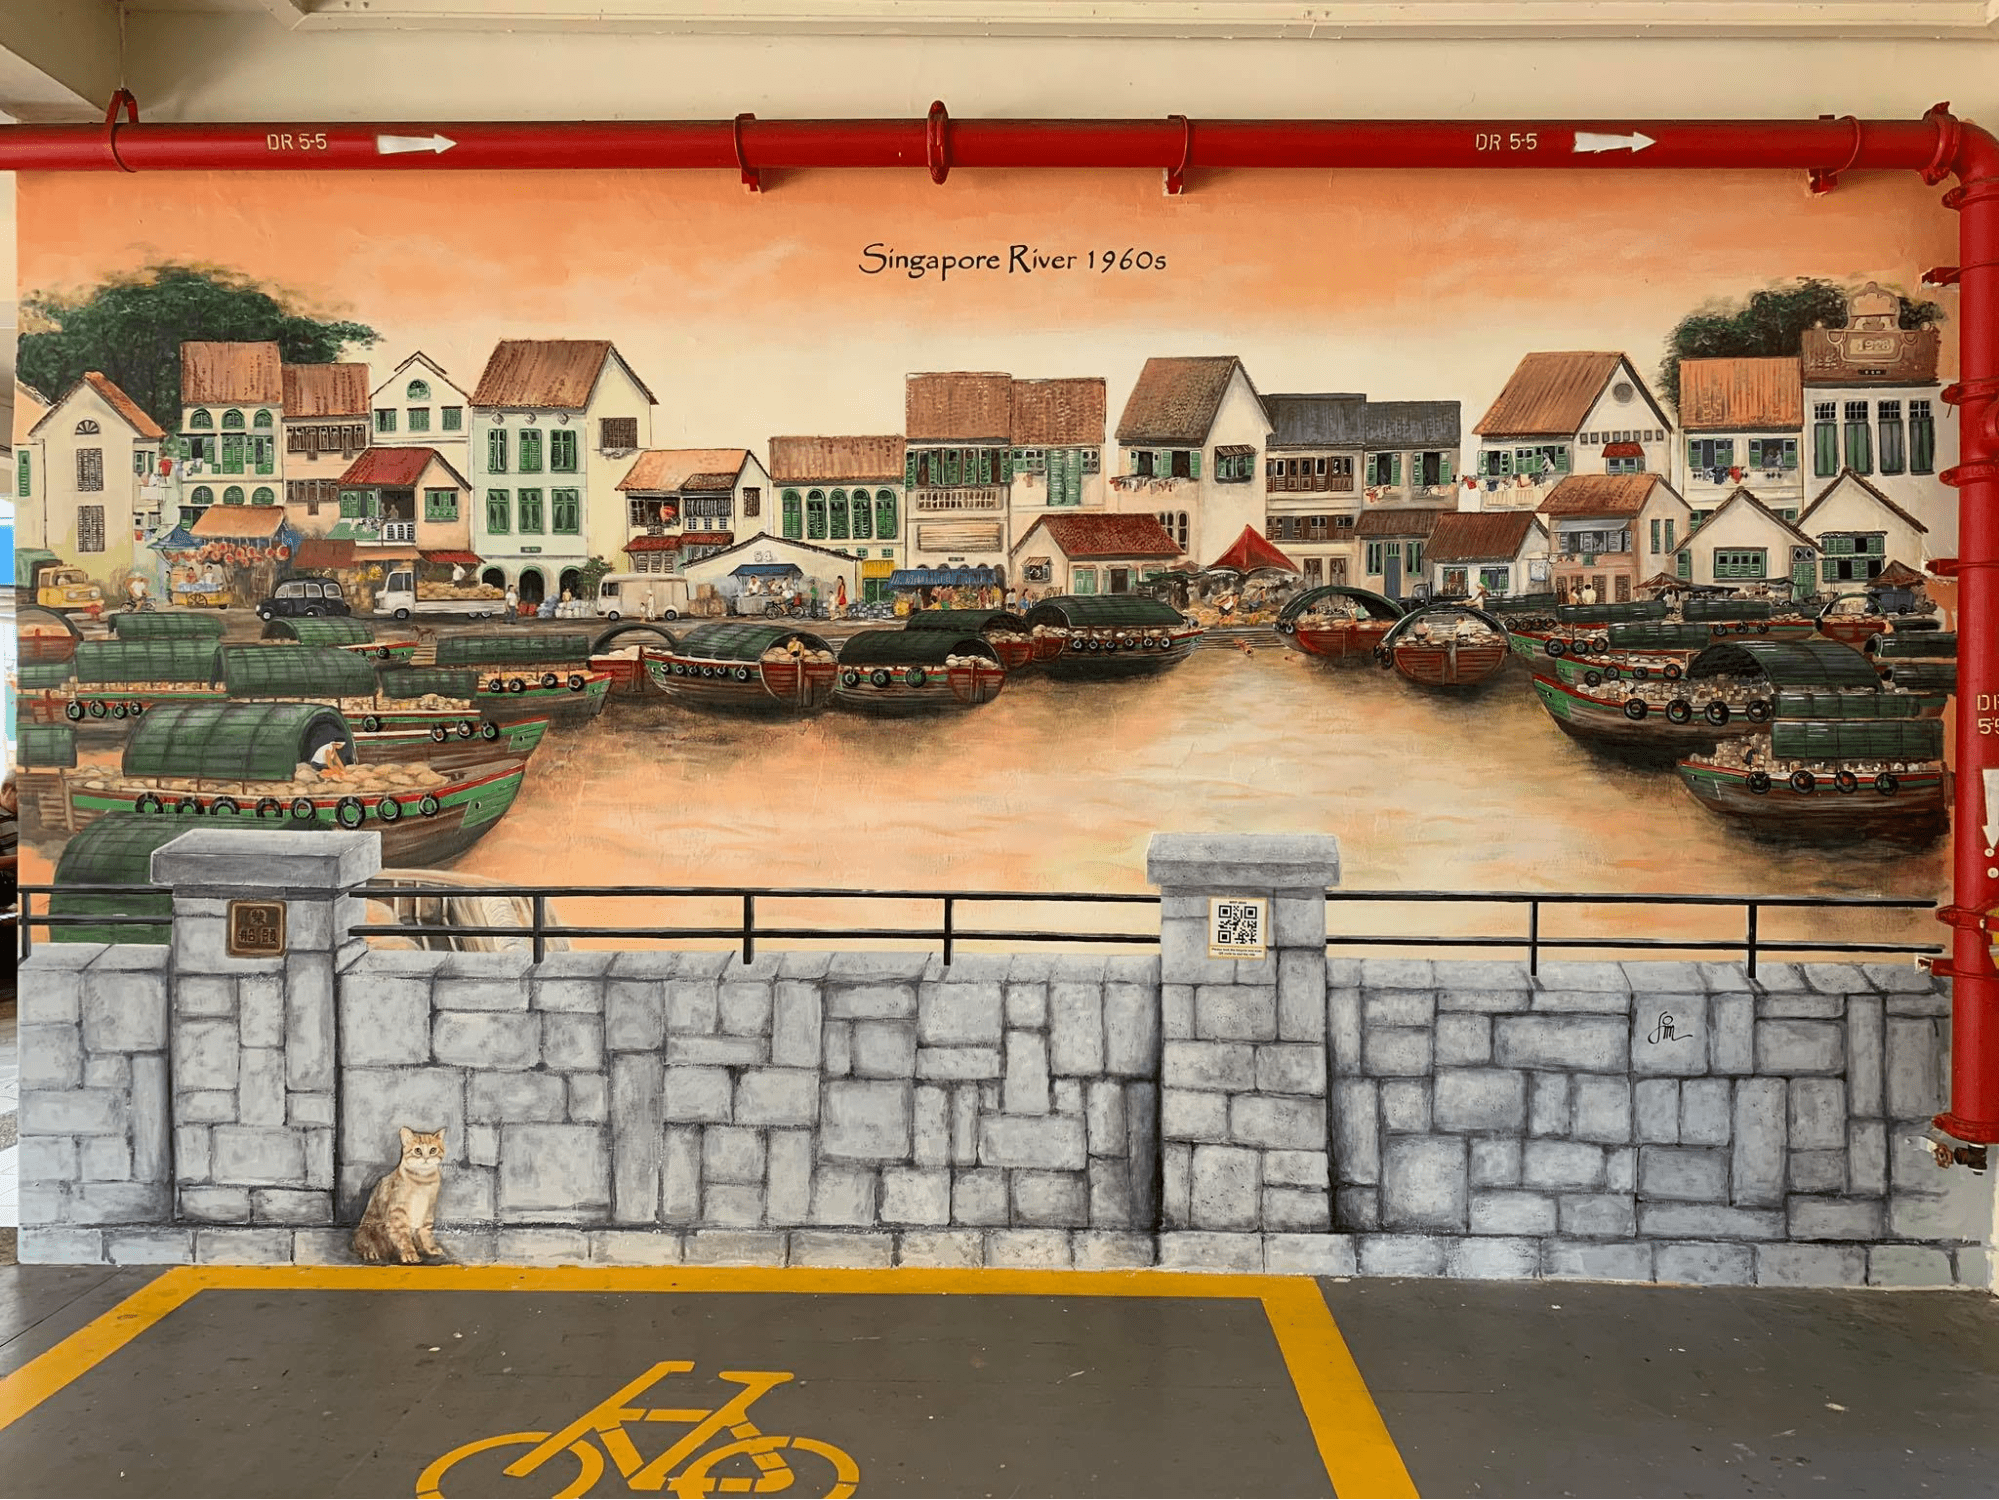 HDB Murals in Singapore - 1960s Singapore River